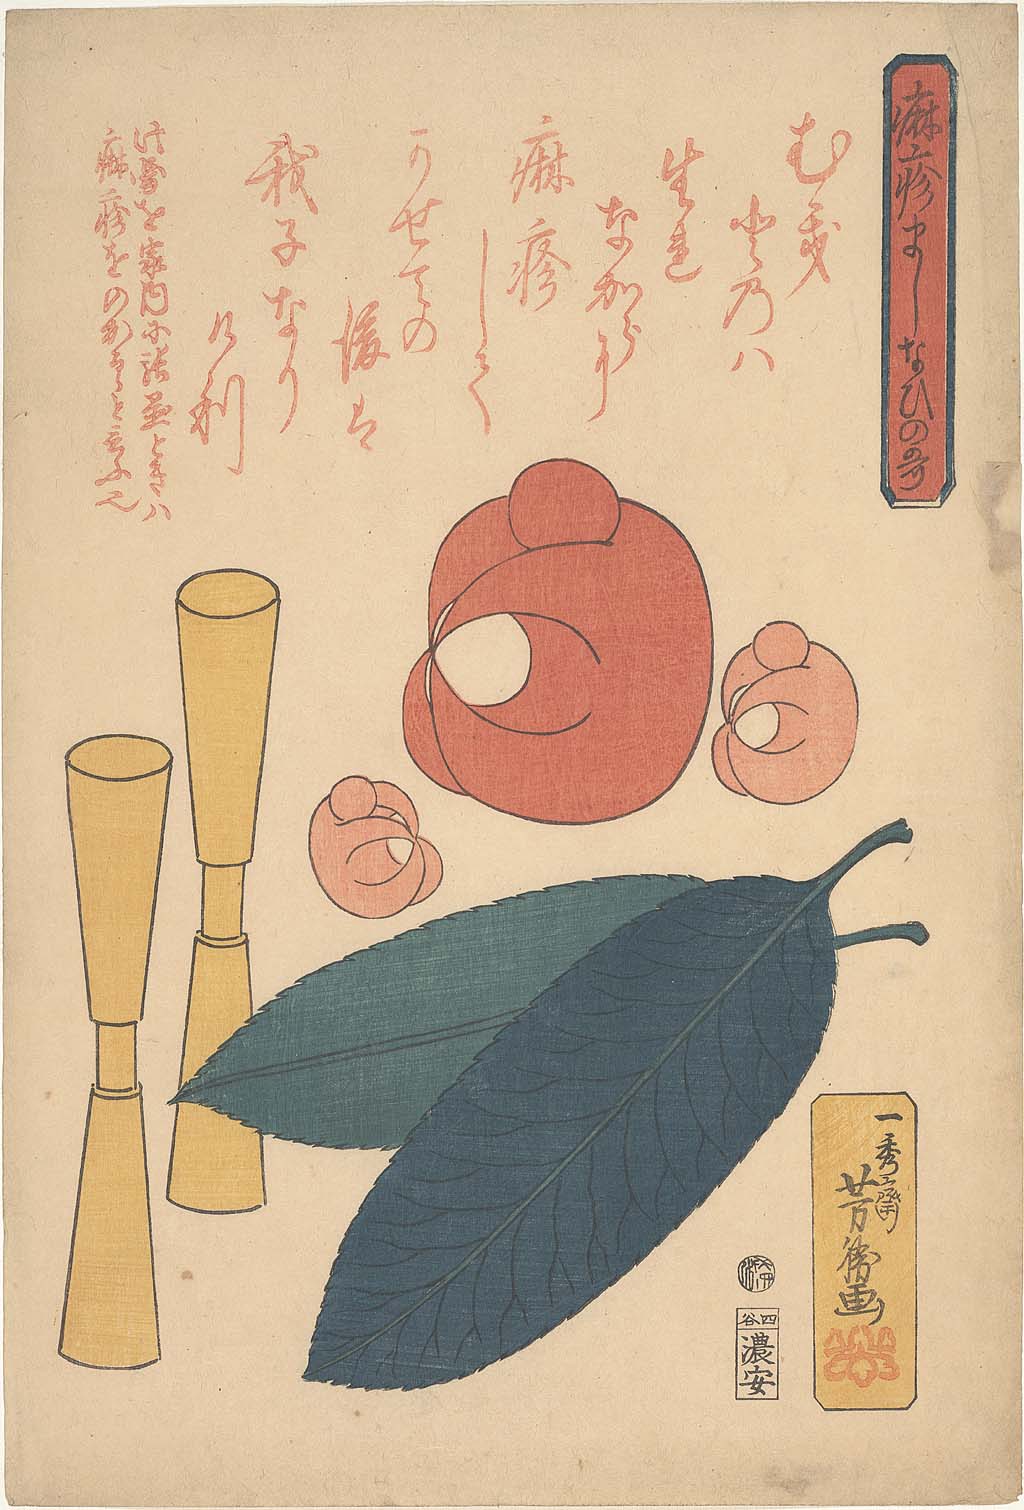 Title- Hashika majinai no uta Poetic charm against measles Creator:Contributor- Utagawa, Yoshikatsu, fl. 1844-1859, Artist Date- 1862